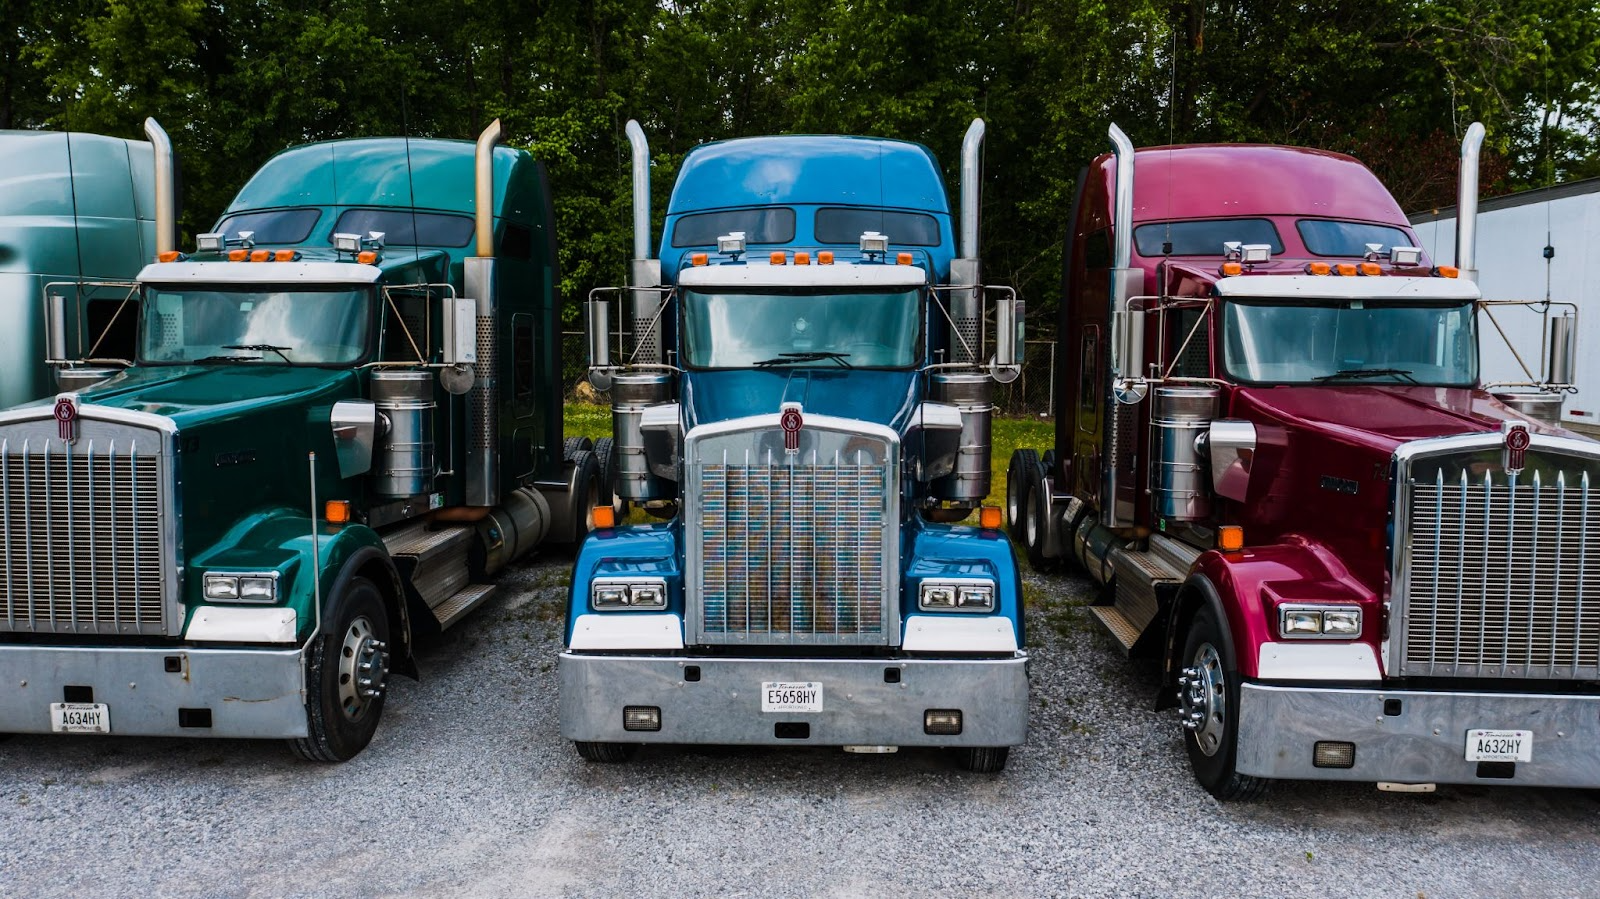 Big rig semi truck arsenal of red, blue, and green trucks